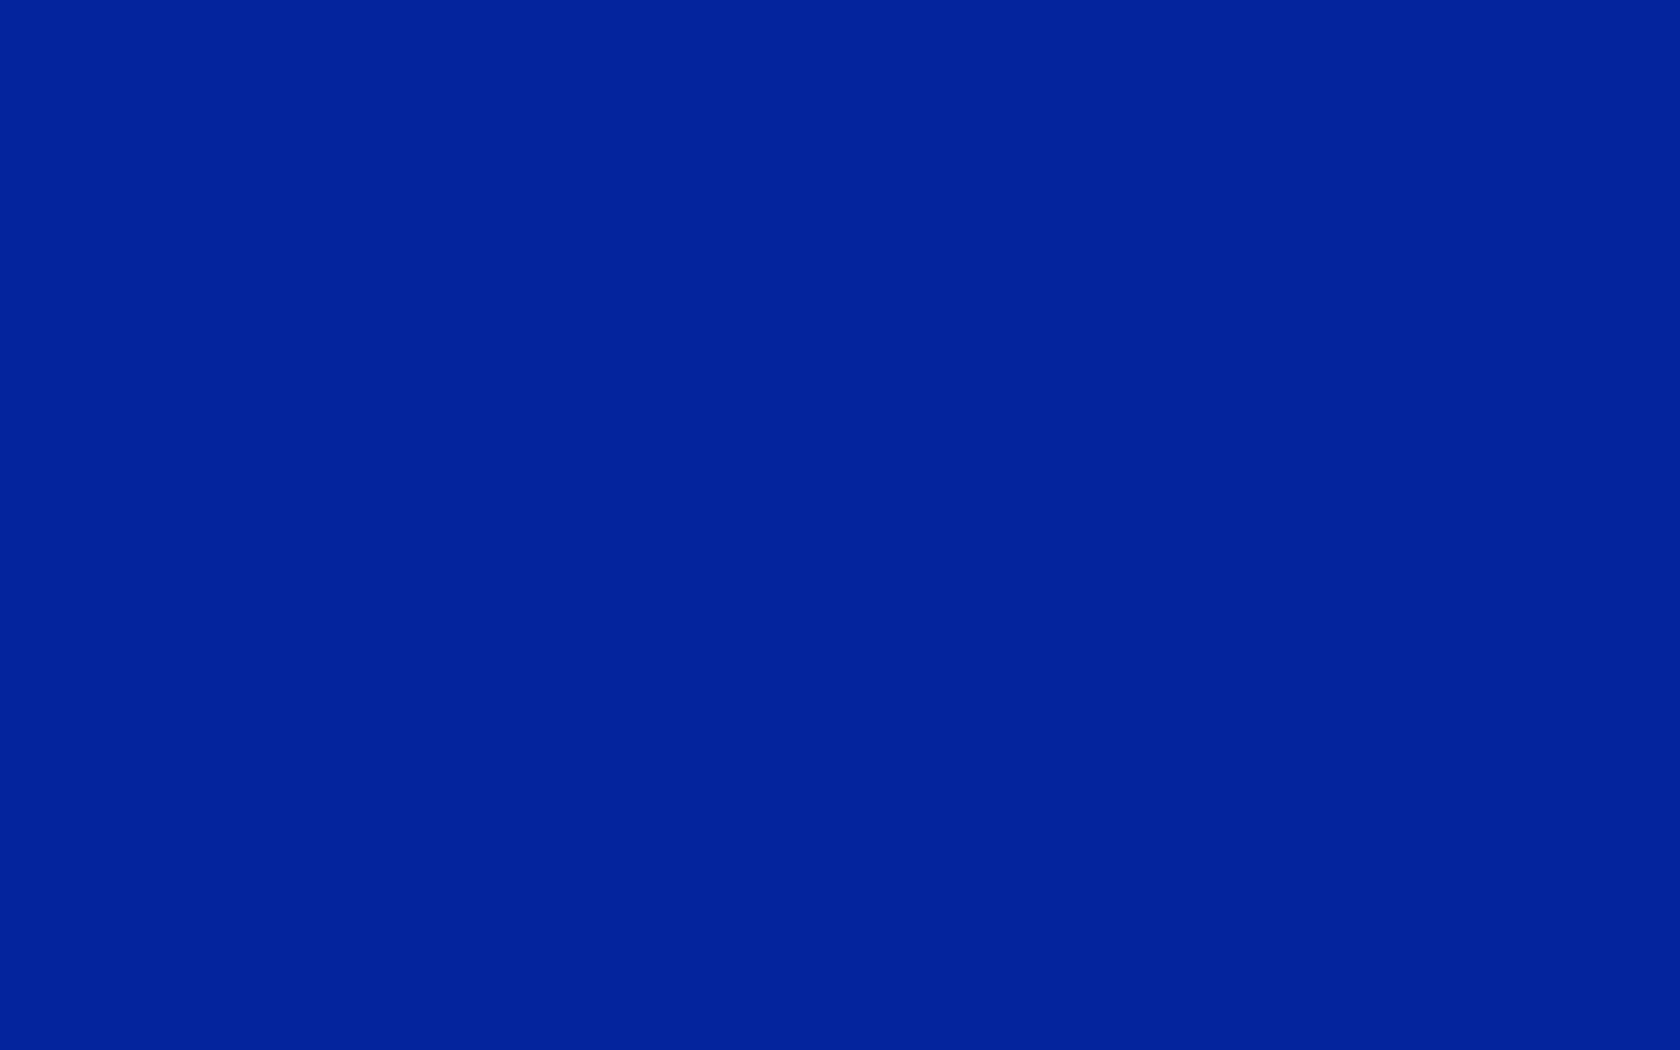 RAL 5002 ультрамарин. Blue Screen хромакей. Pantone Blue 072 c. Нави Блю цвет. Очень яркий голубой цвет